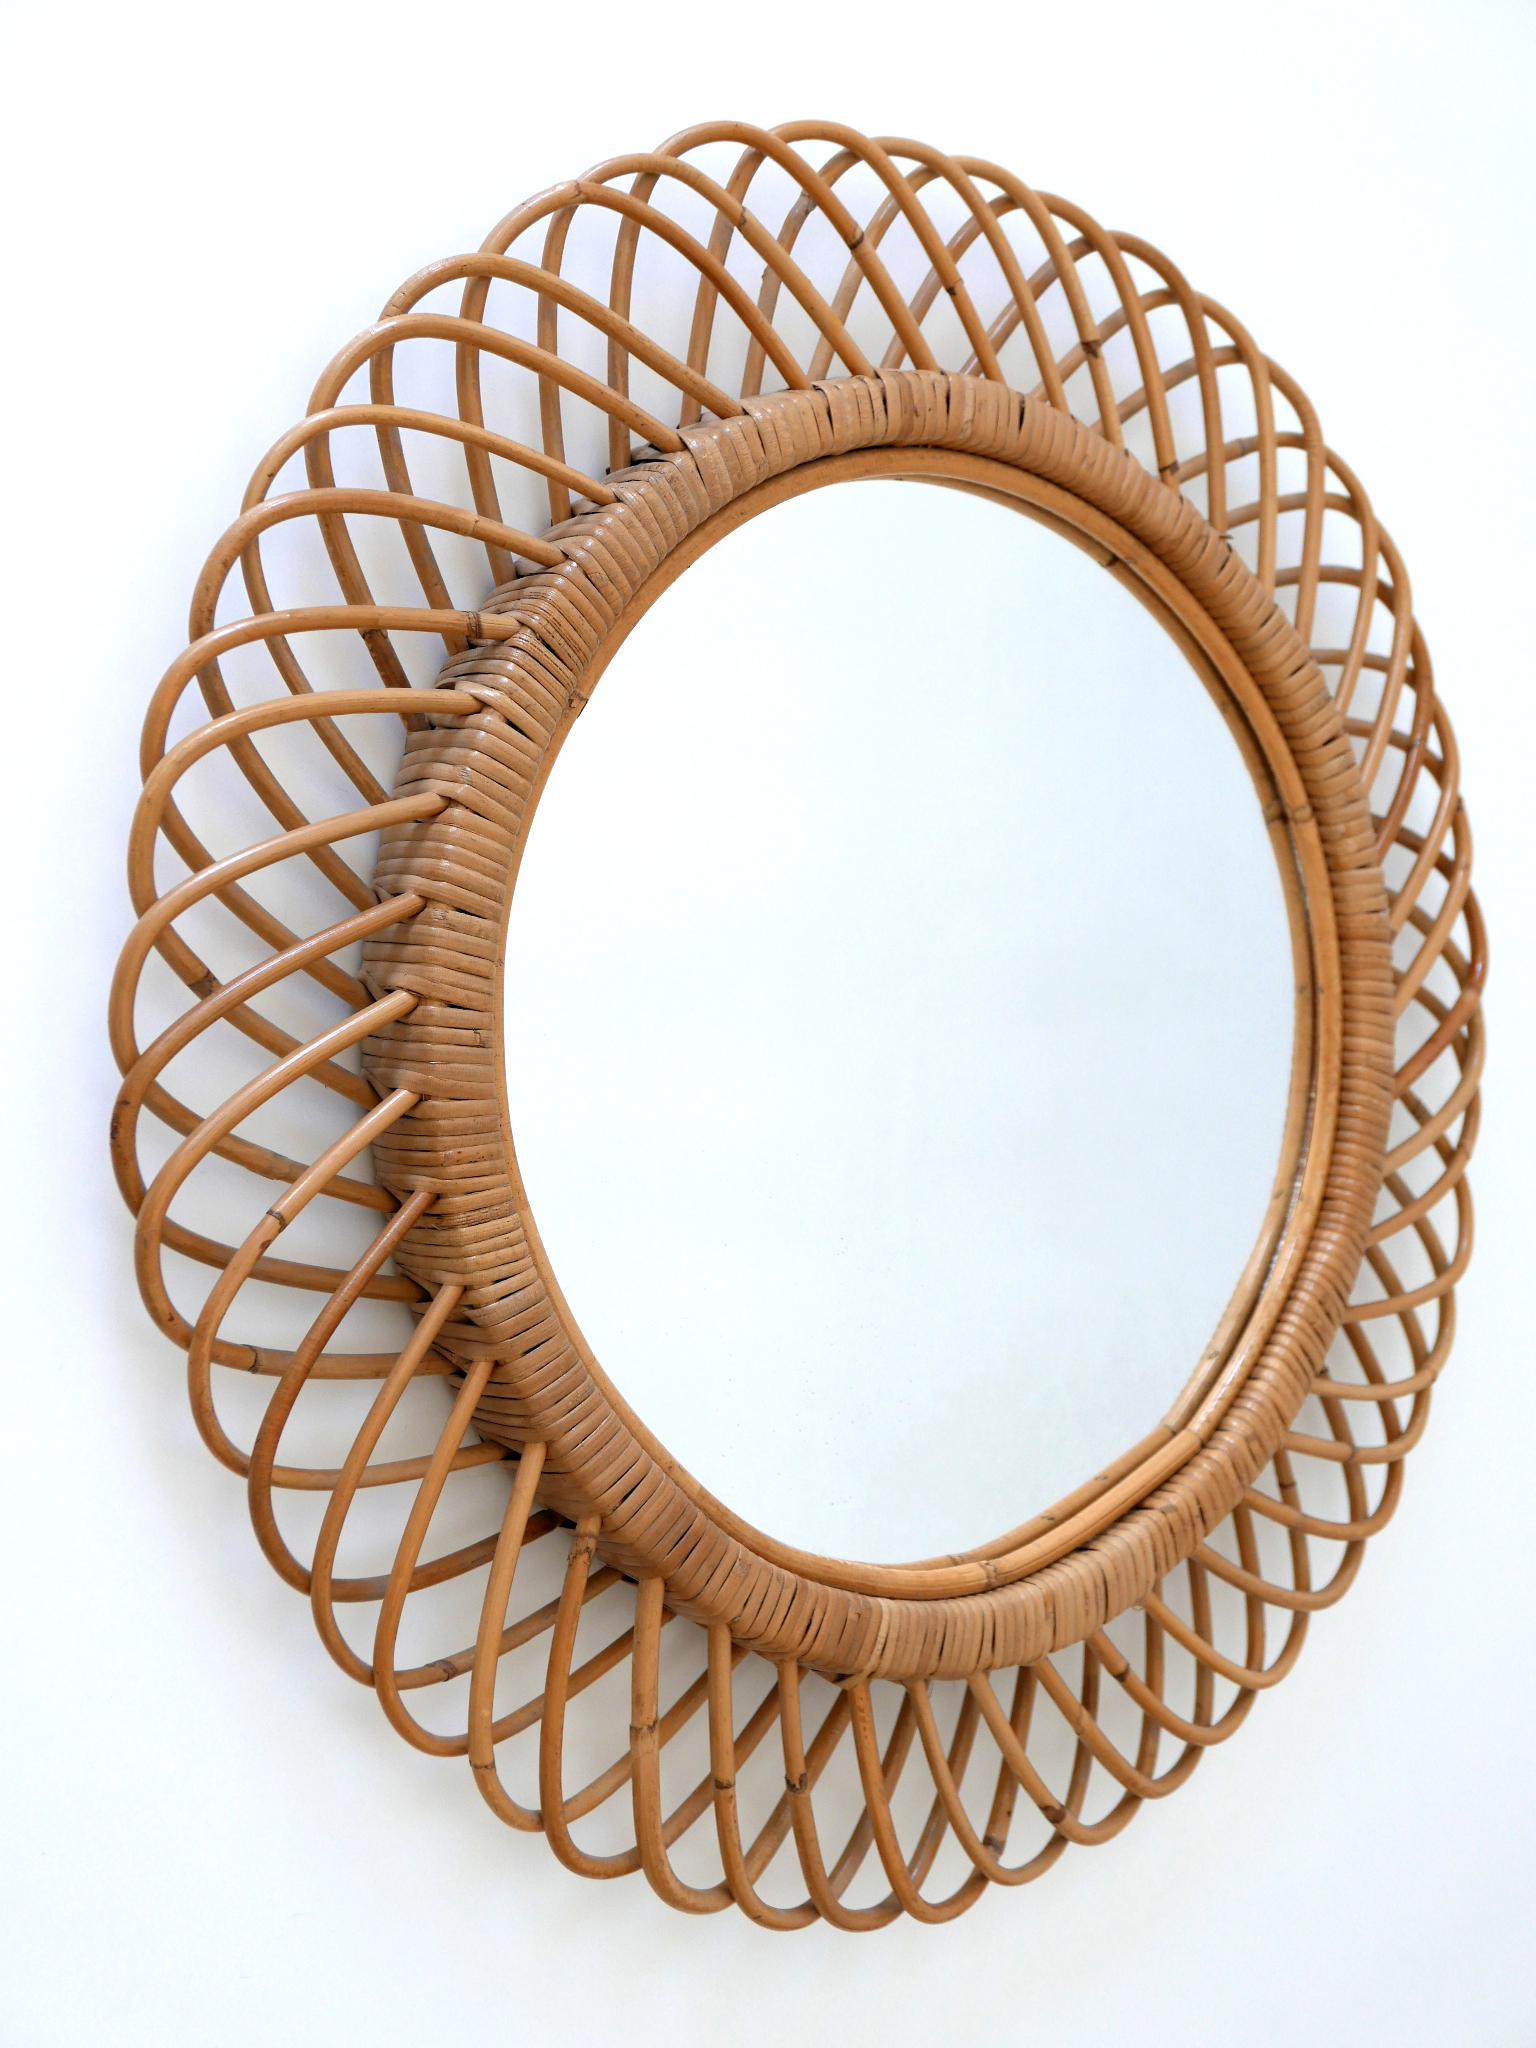 Italian Mid-Century Modern Rattan & Bamboo Circular Wall Mirror Italy 1960s For Sale